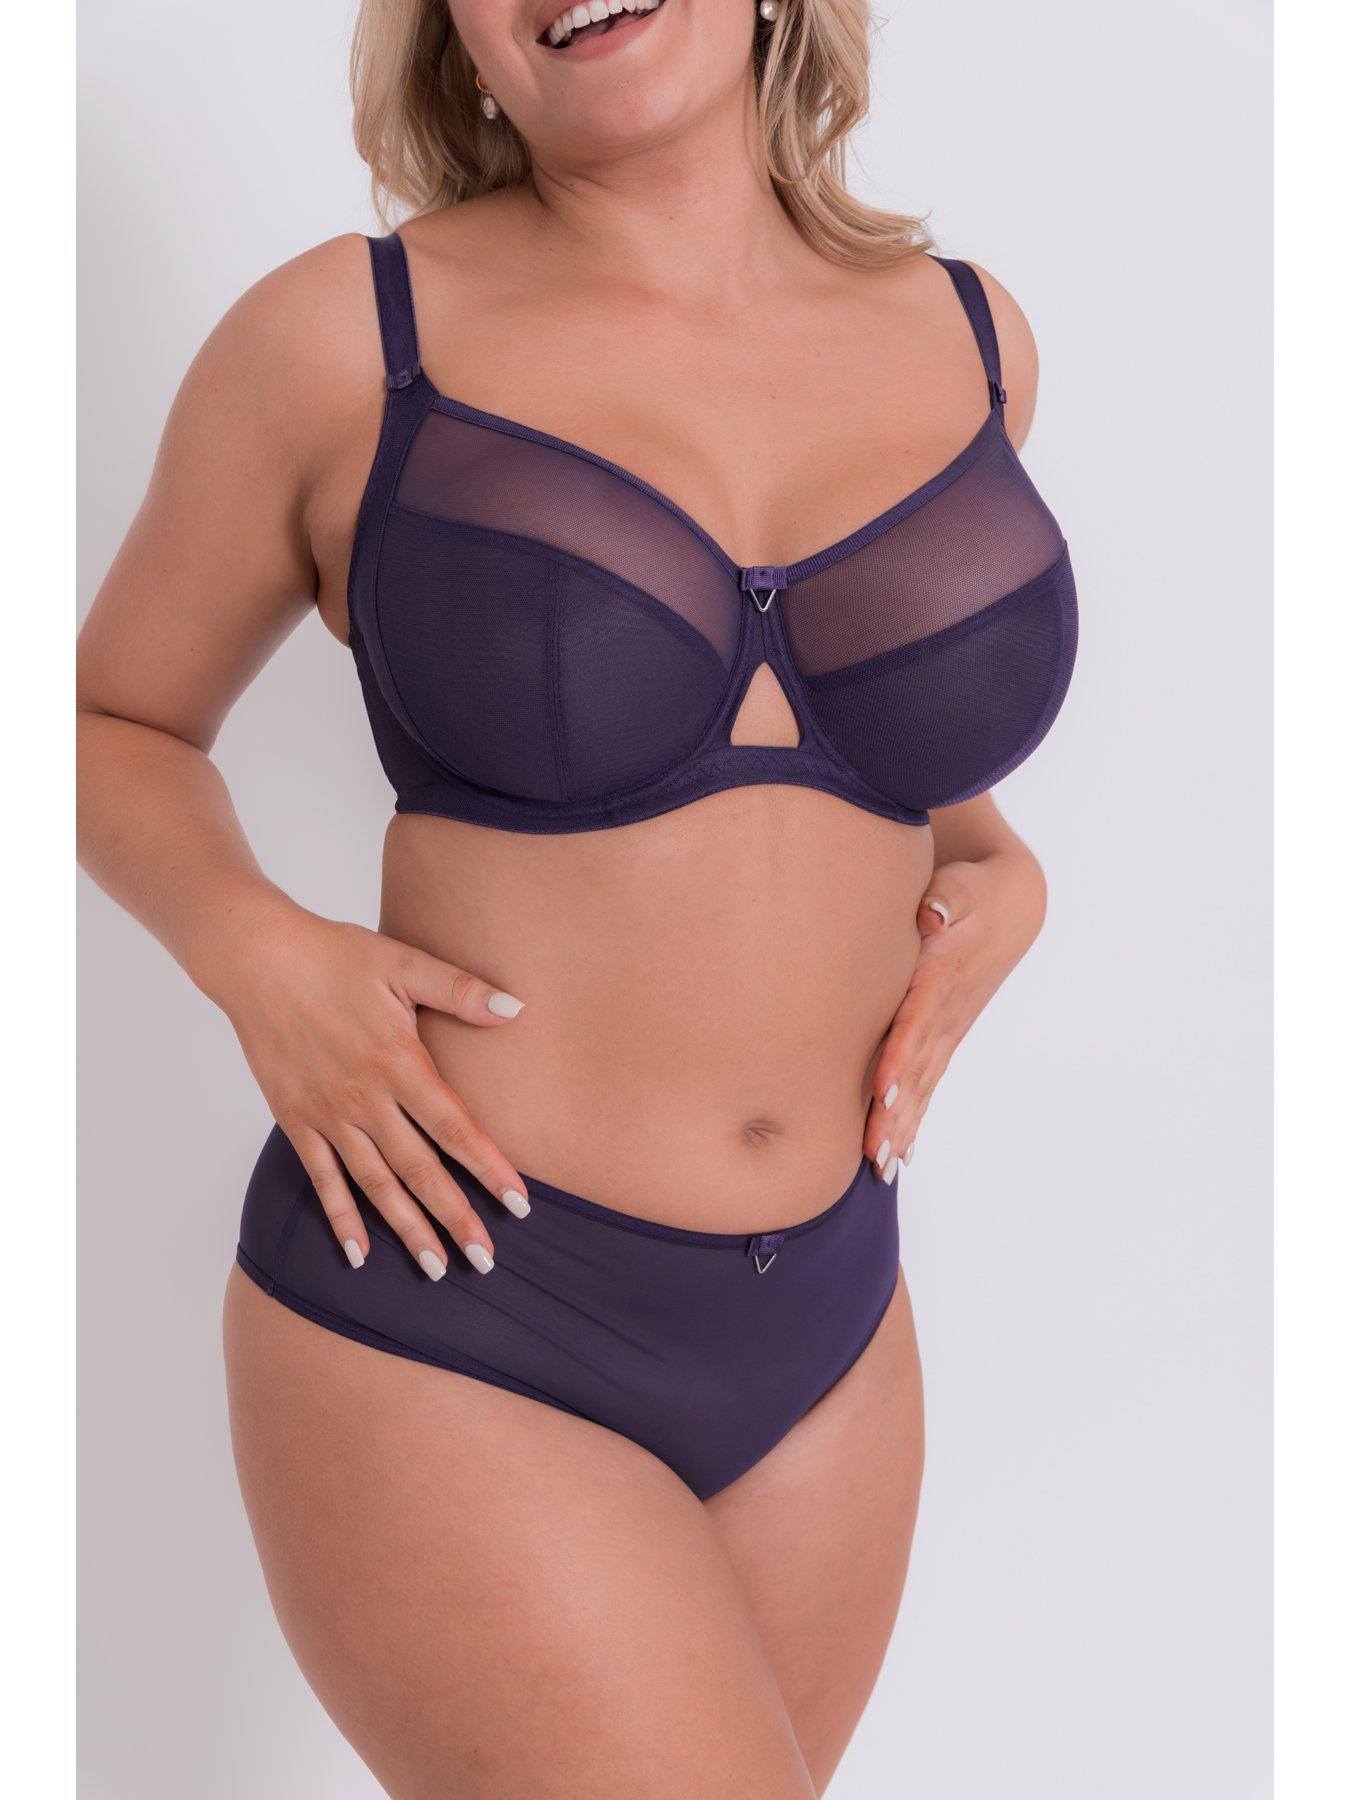 30I Bras & Lingerie  30I Bra Size For Curves – Page 2 – Curvy Kate US